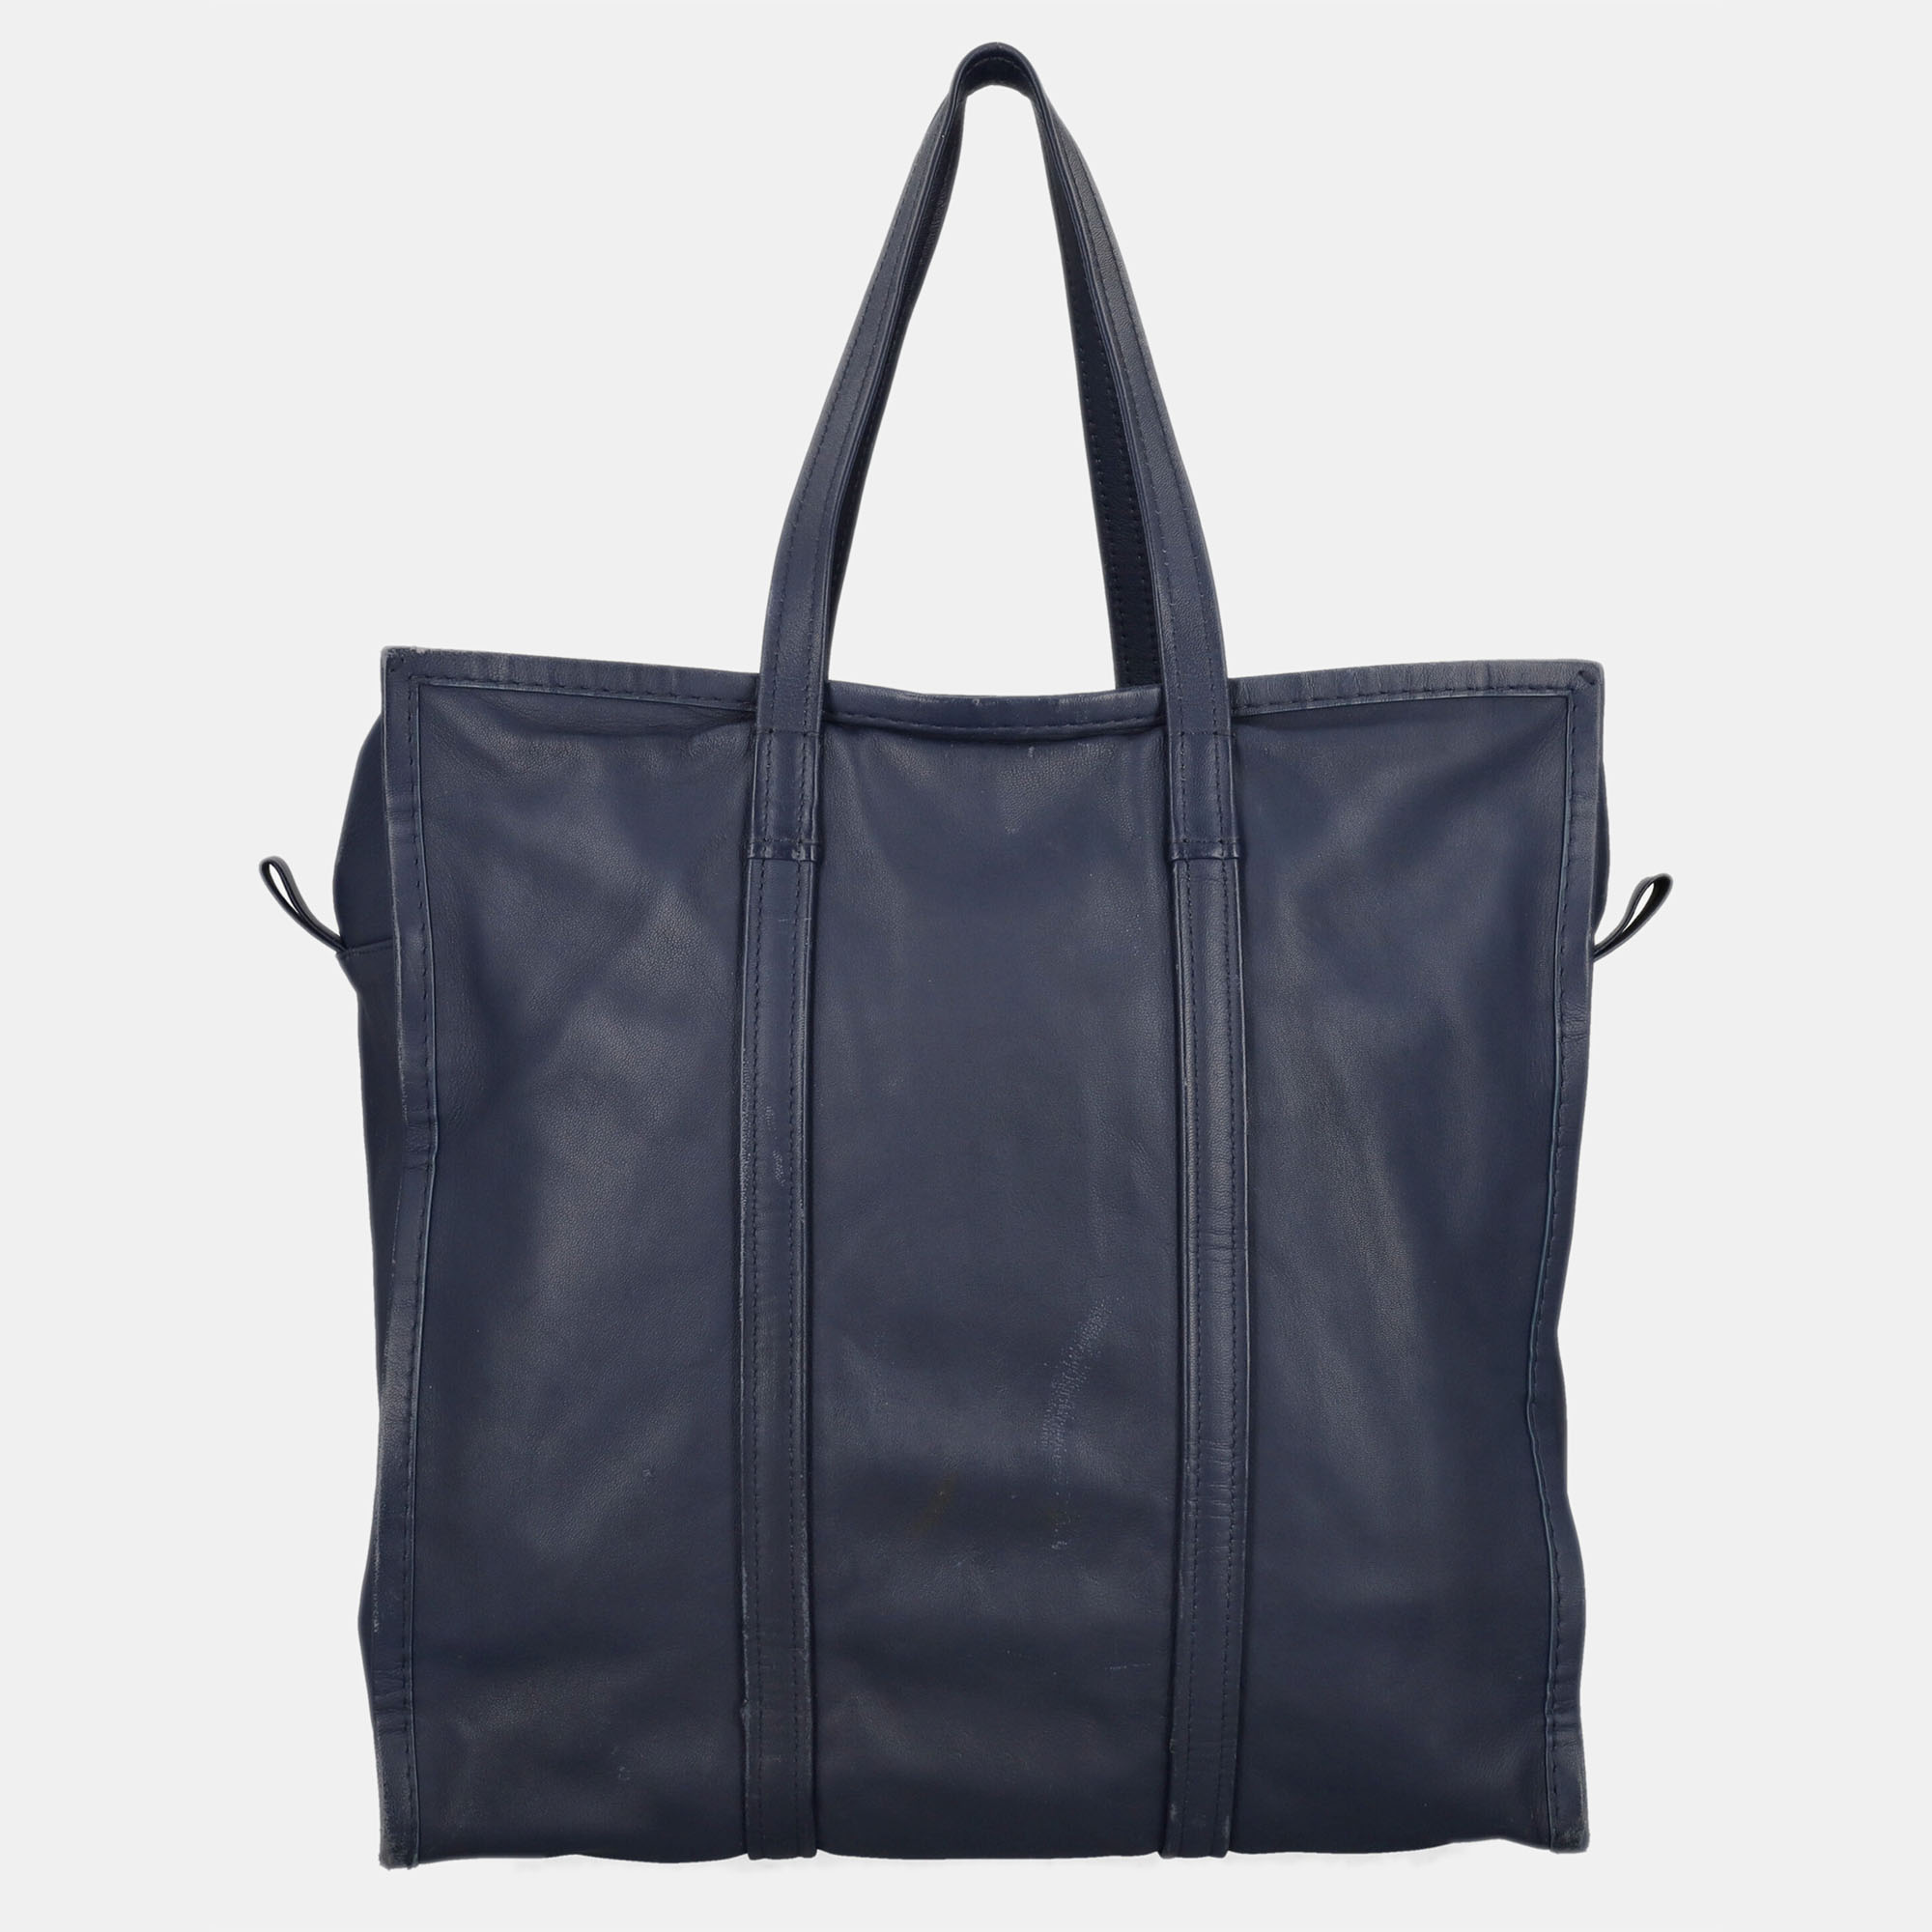 Balenciaga Bazaar -  Women's Leather Tote Bag - Navy - One Size